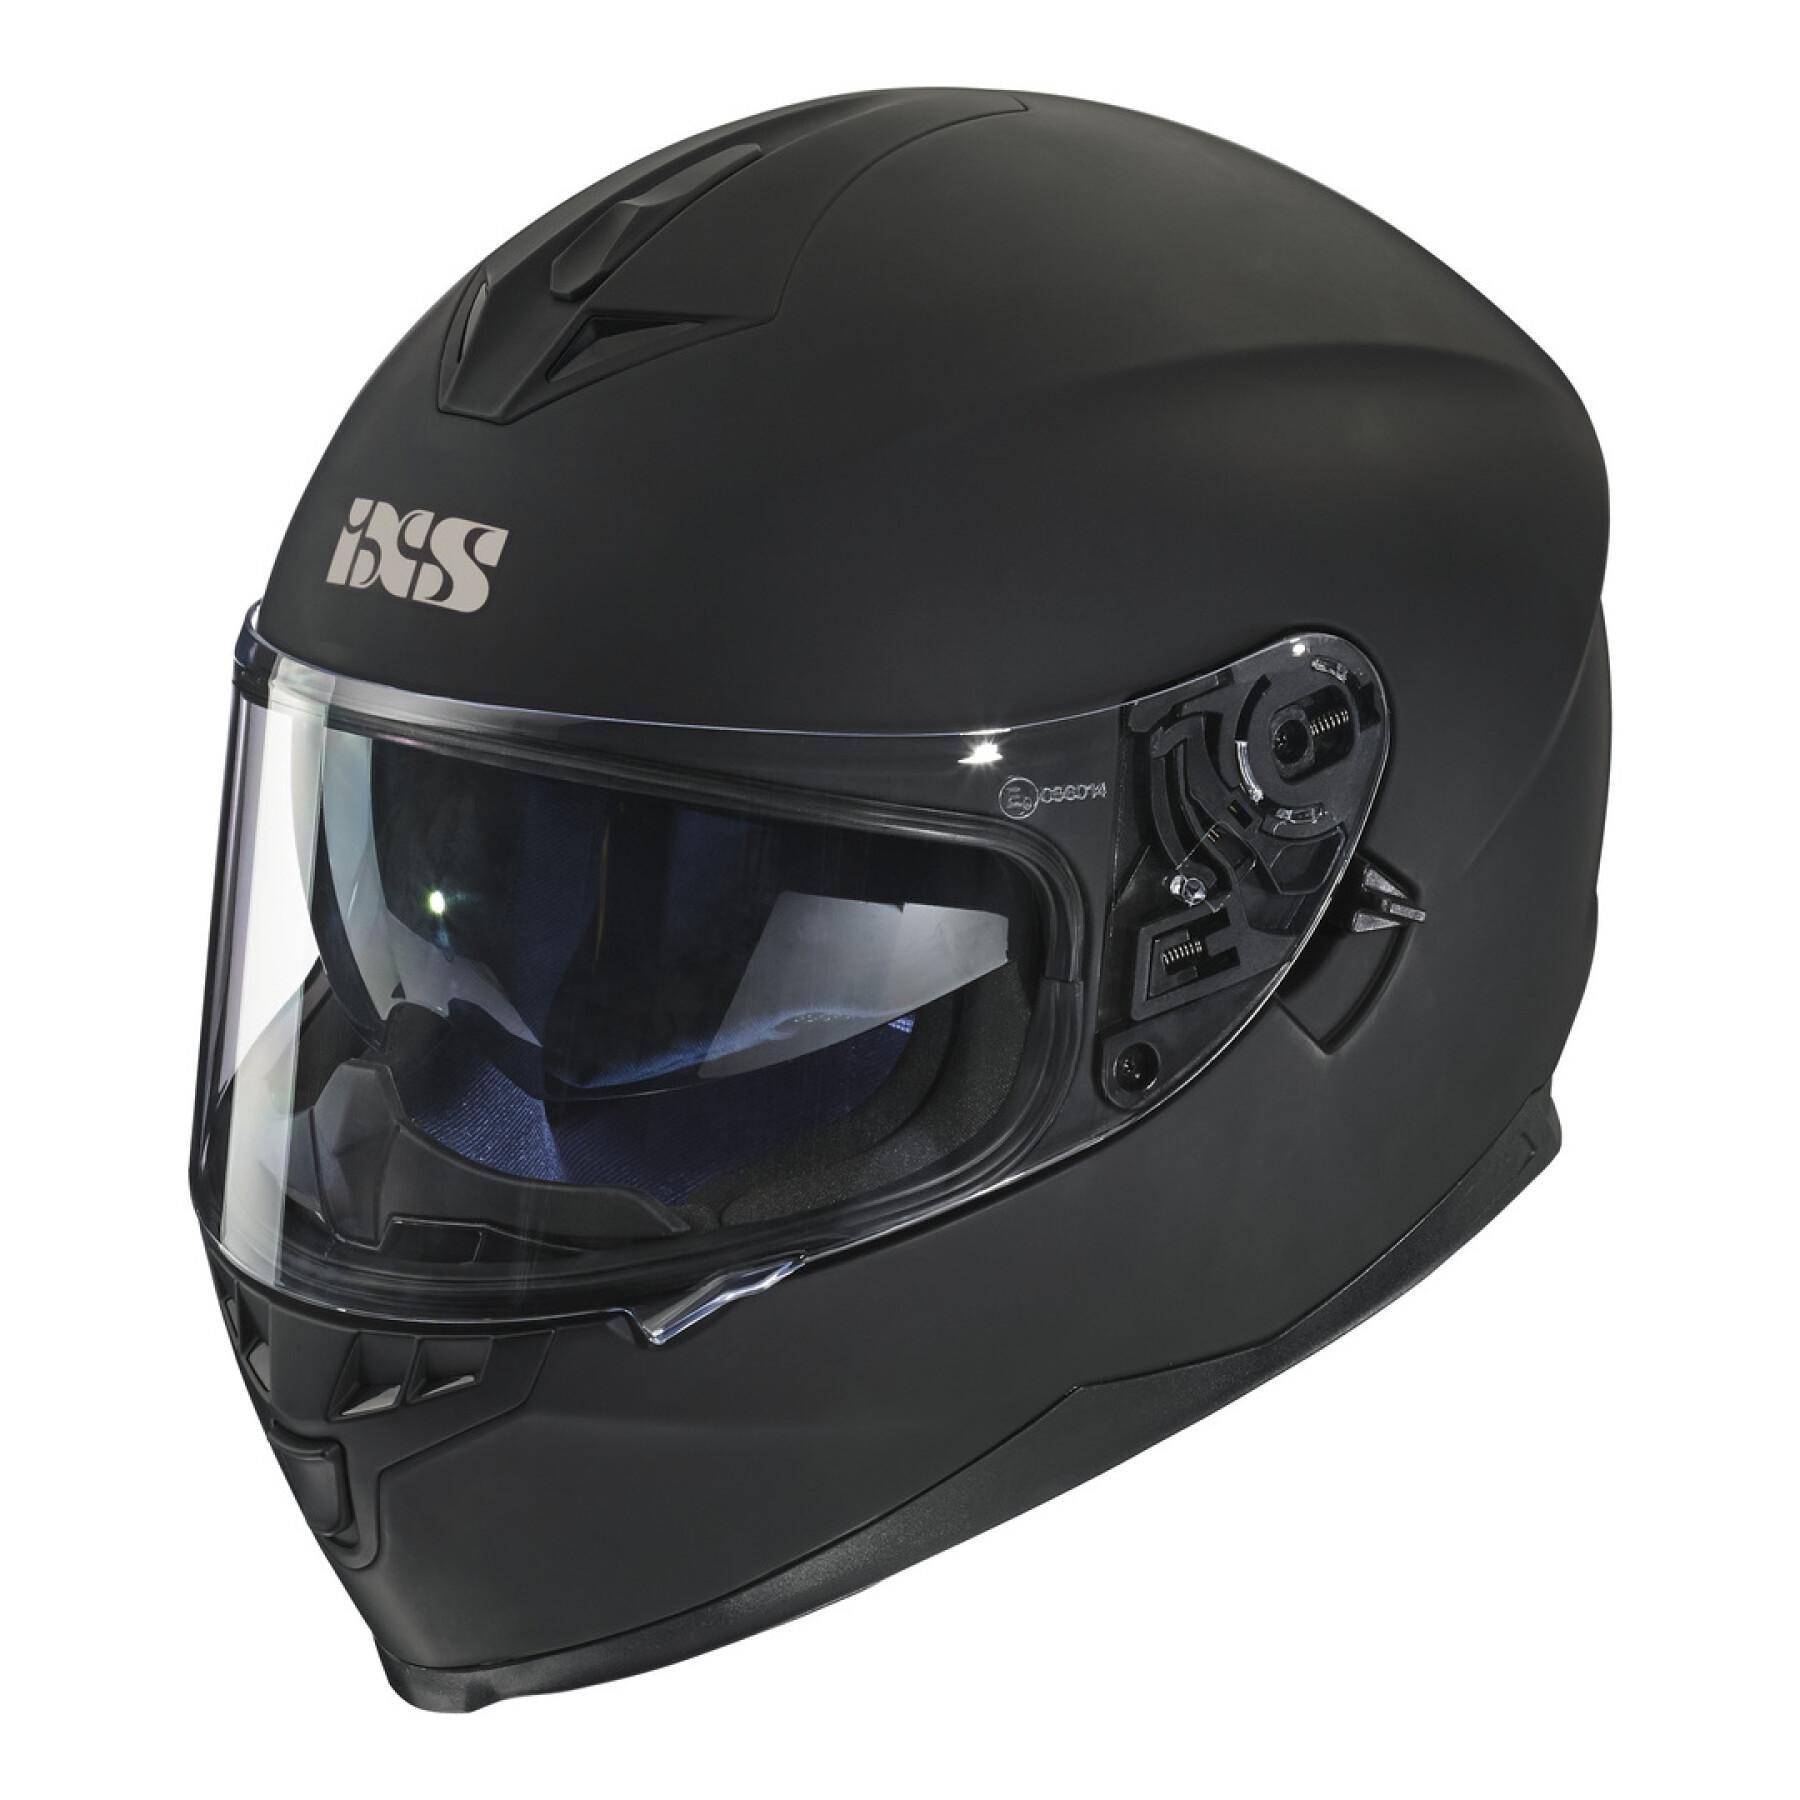 Full face motorcycle helmet IXS 1100 1.0